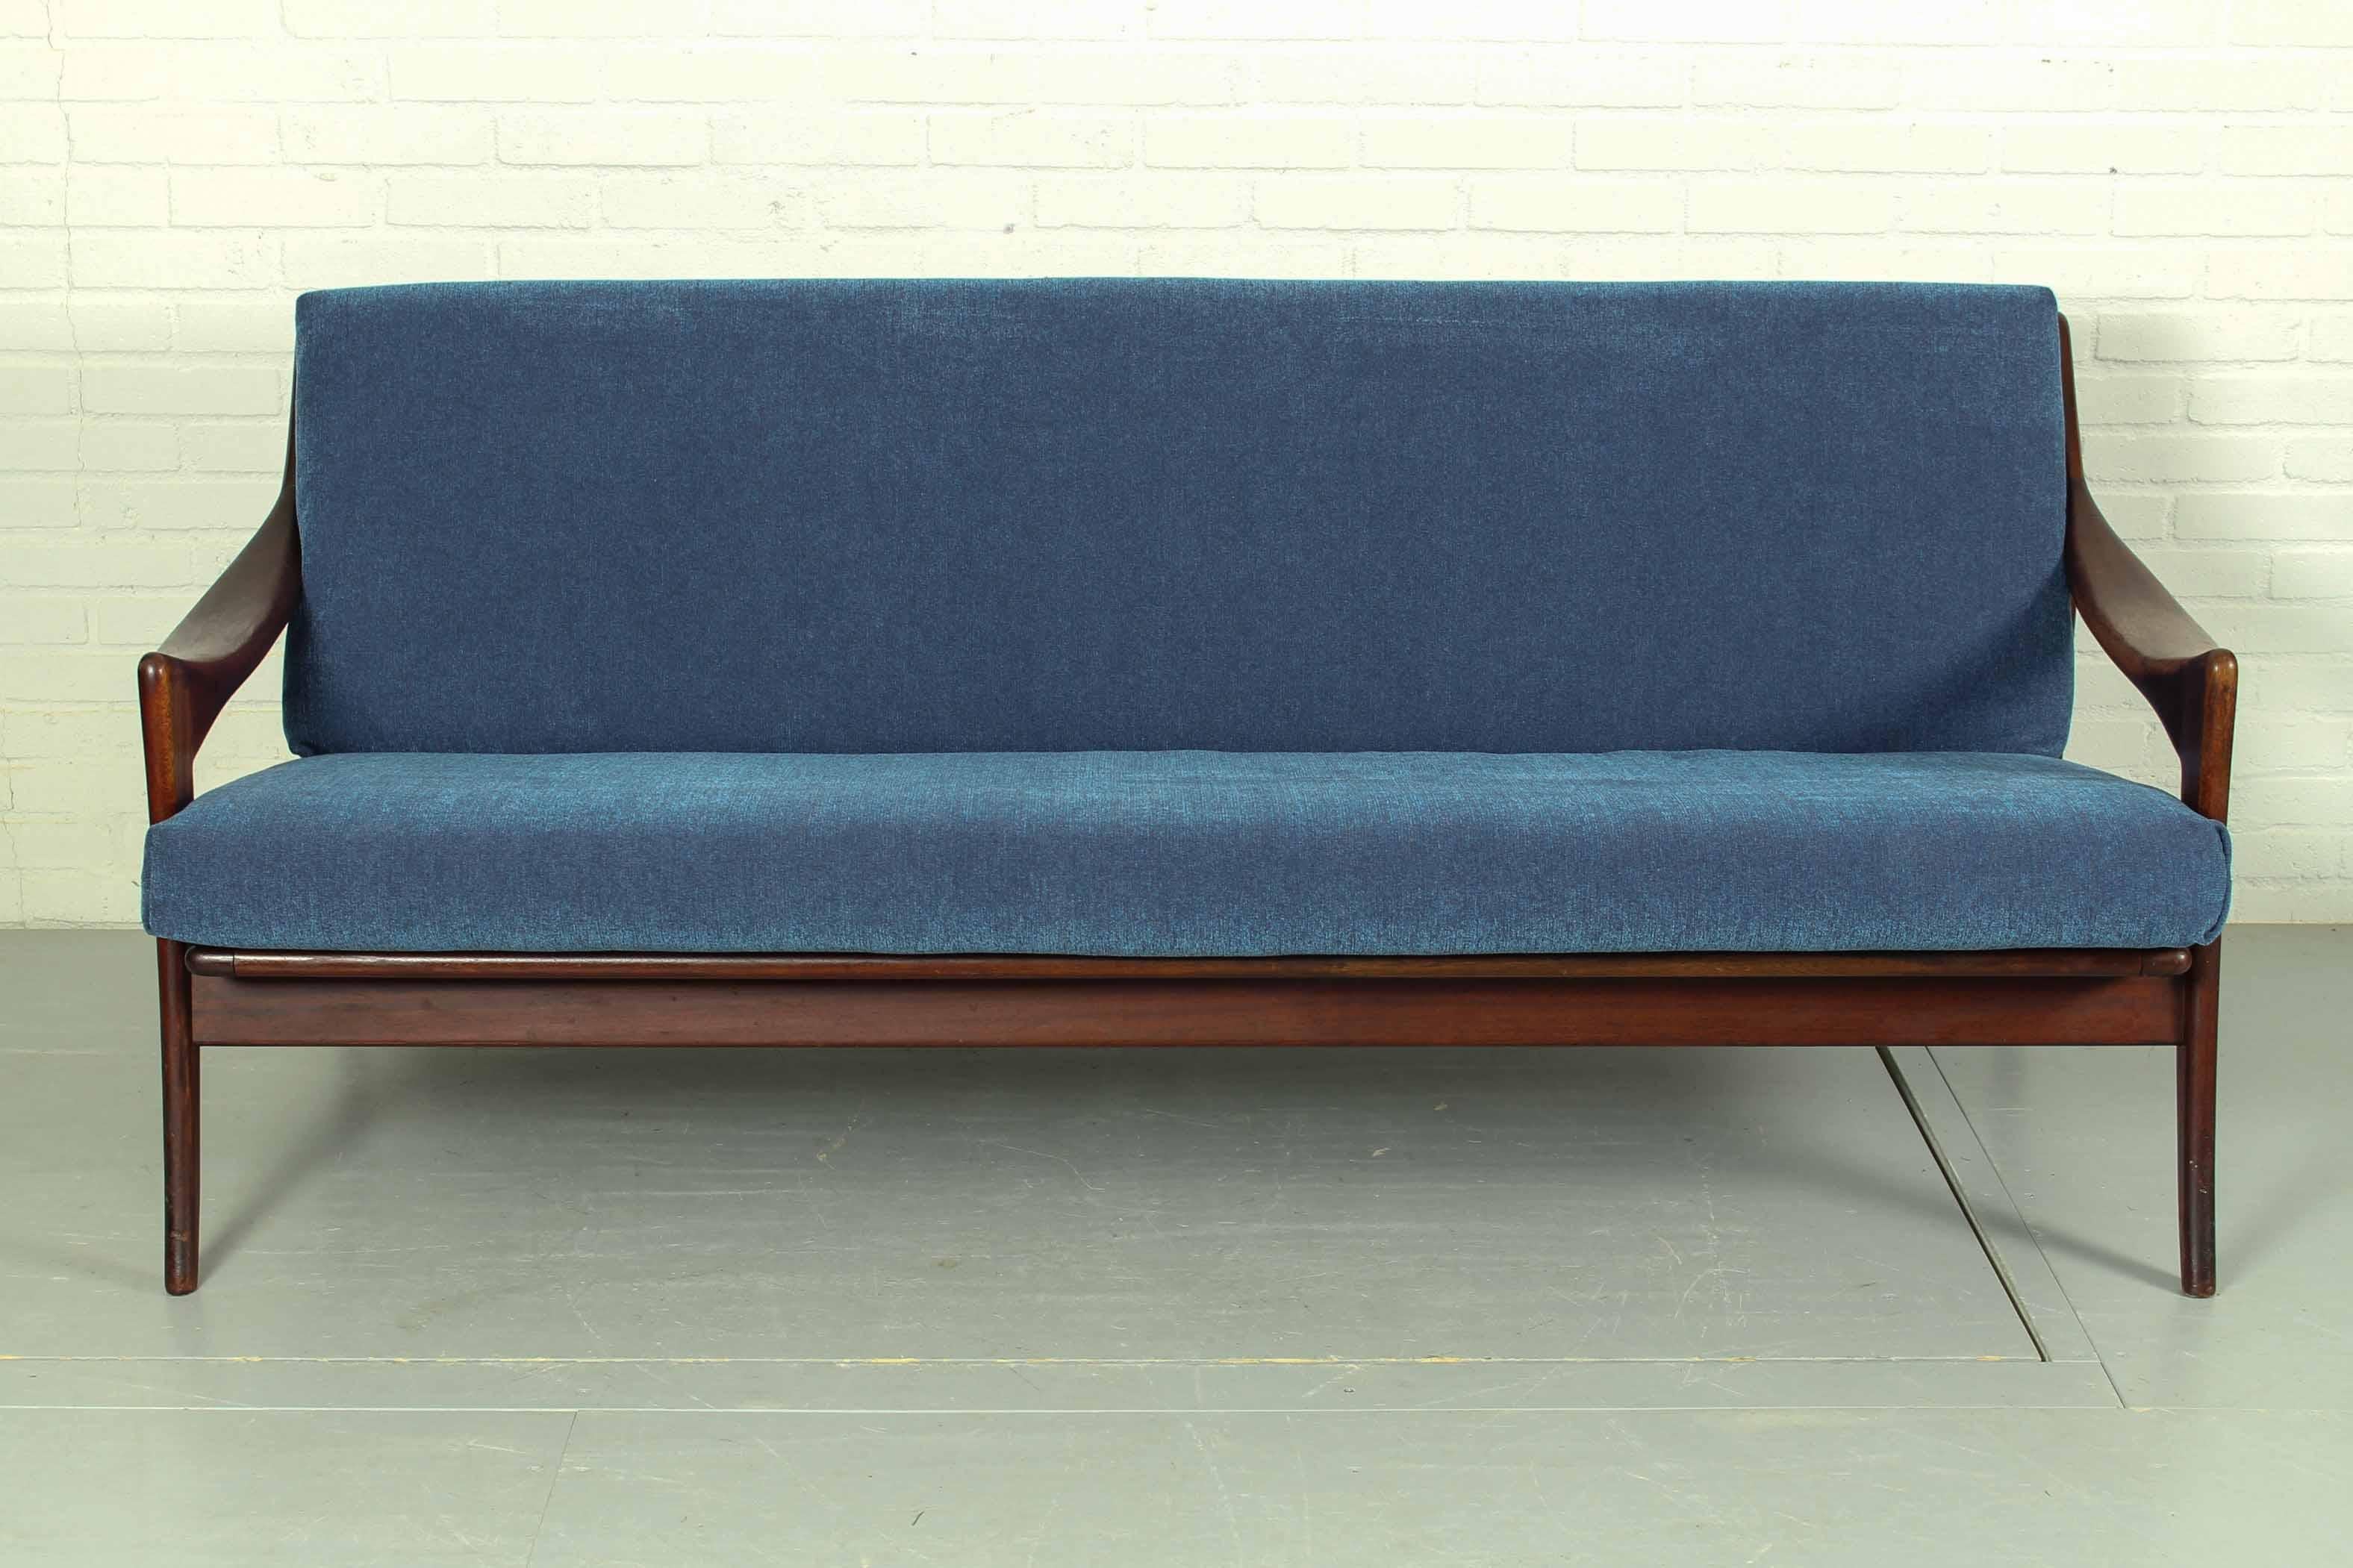 Vintage de Ster Gelderland sofa with teak frame in organic design and elegant armrests. New high quality foam with new upholstery in blue melange. 

Dimensions: 185cm W x 75cm H x 82cm D.
  